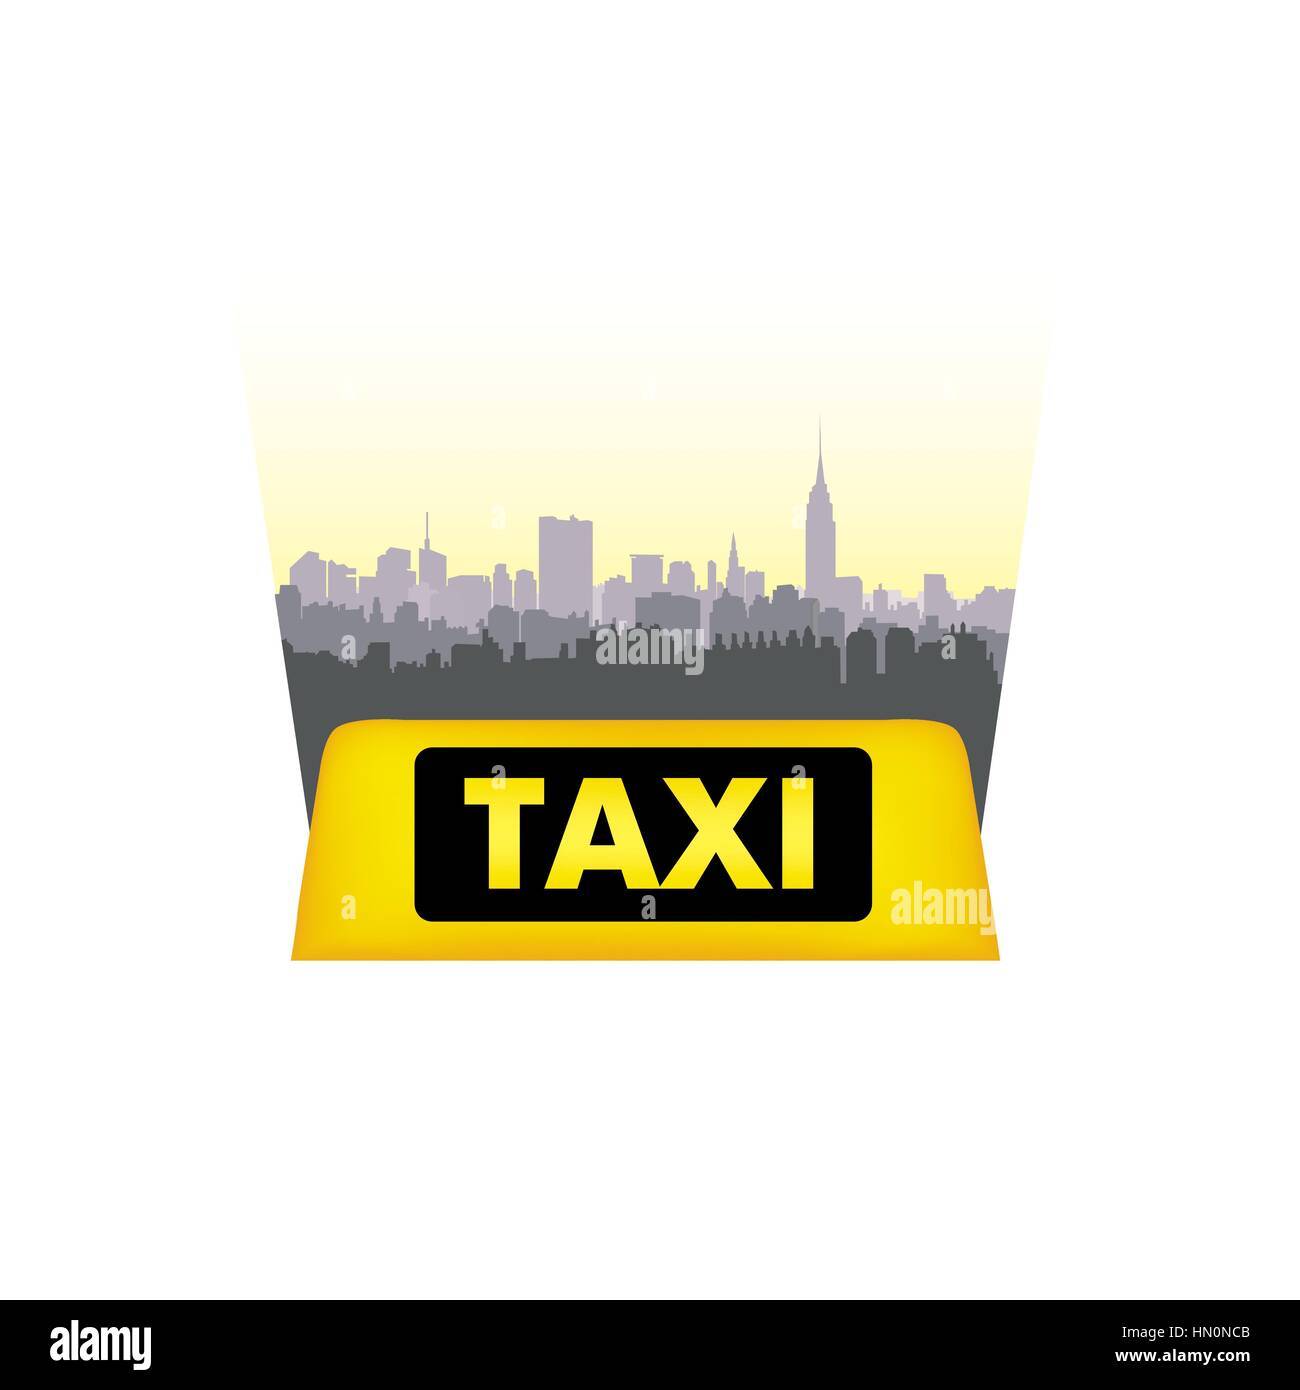 Servicio de taxi taxi. cabezal cartel city antecedentes. Llame al paisaje urbano de taxi concepto Ilustración del Vector